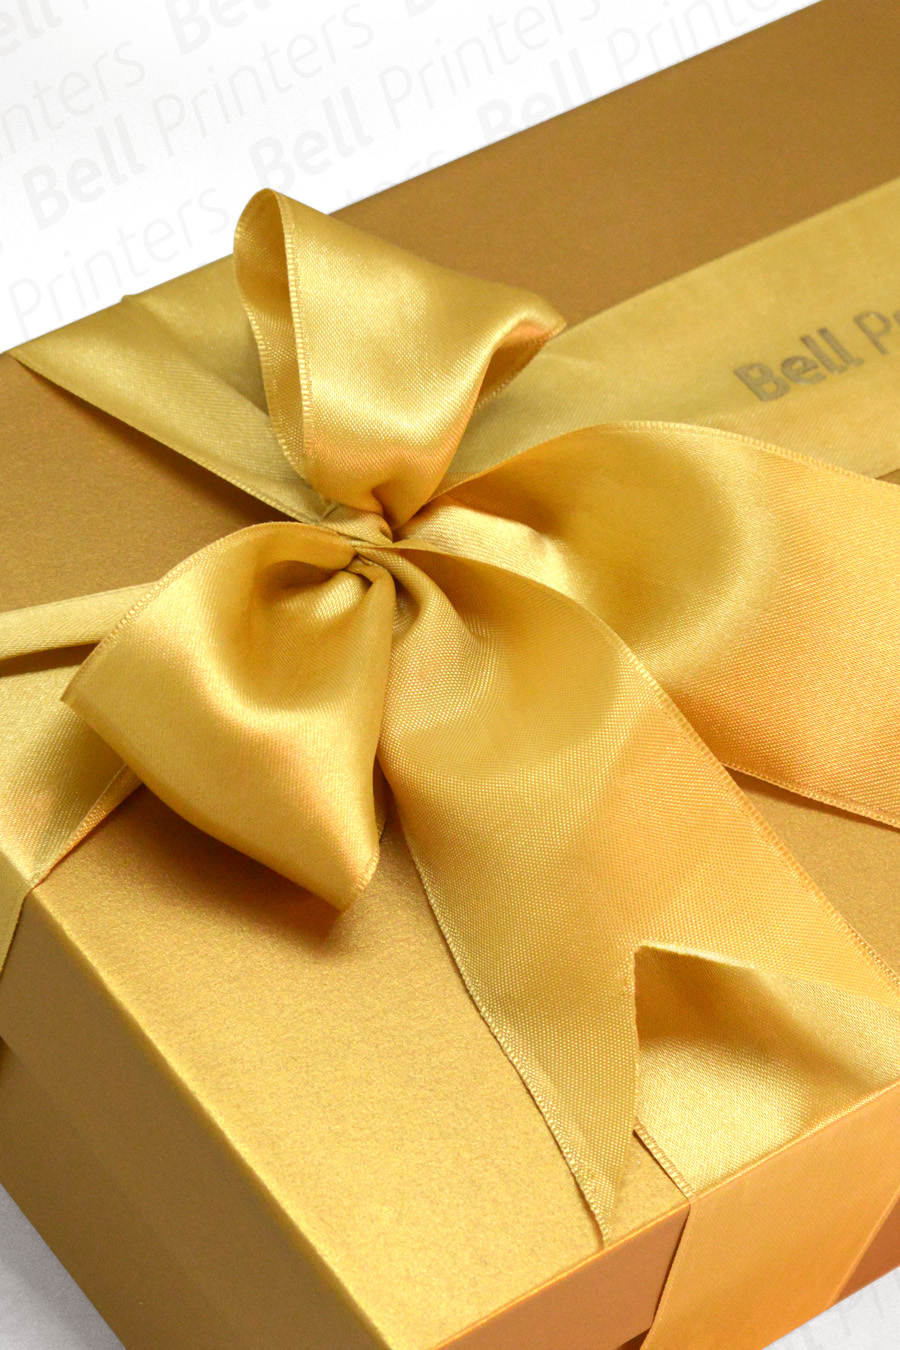 Antique-Gold-Gift-Box-Luxury-Rigid-Box3